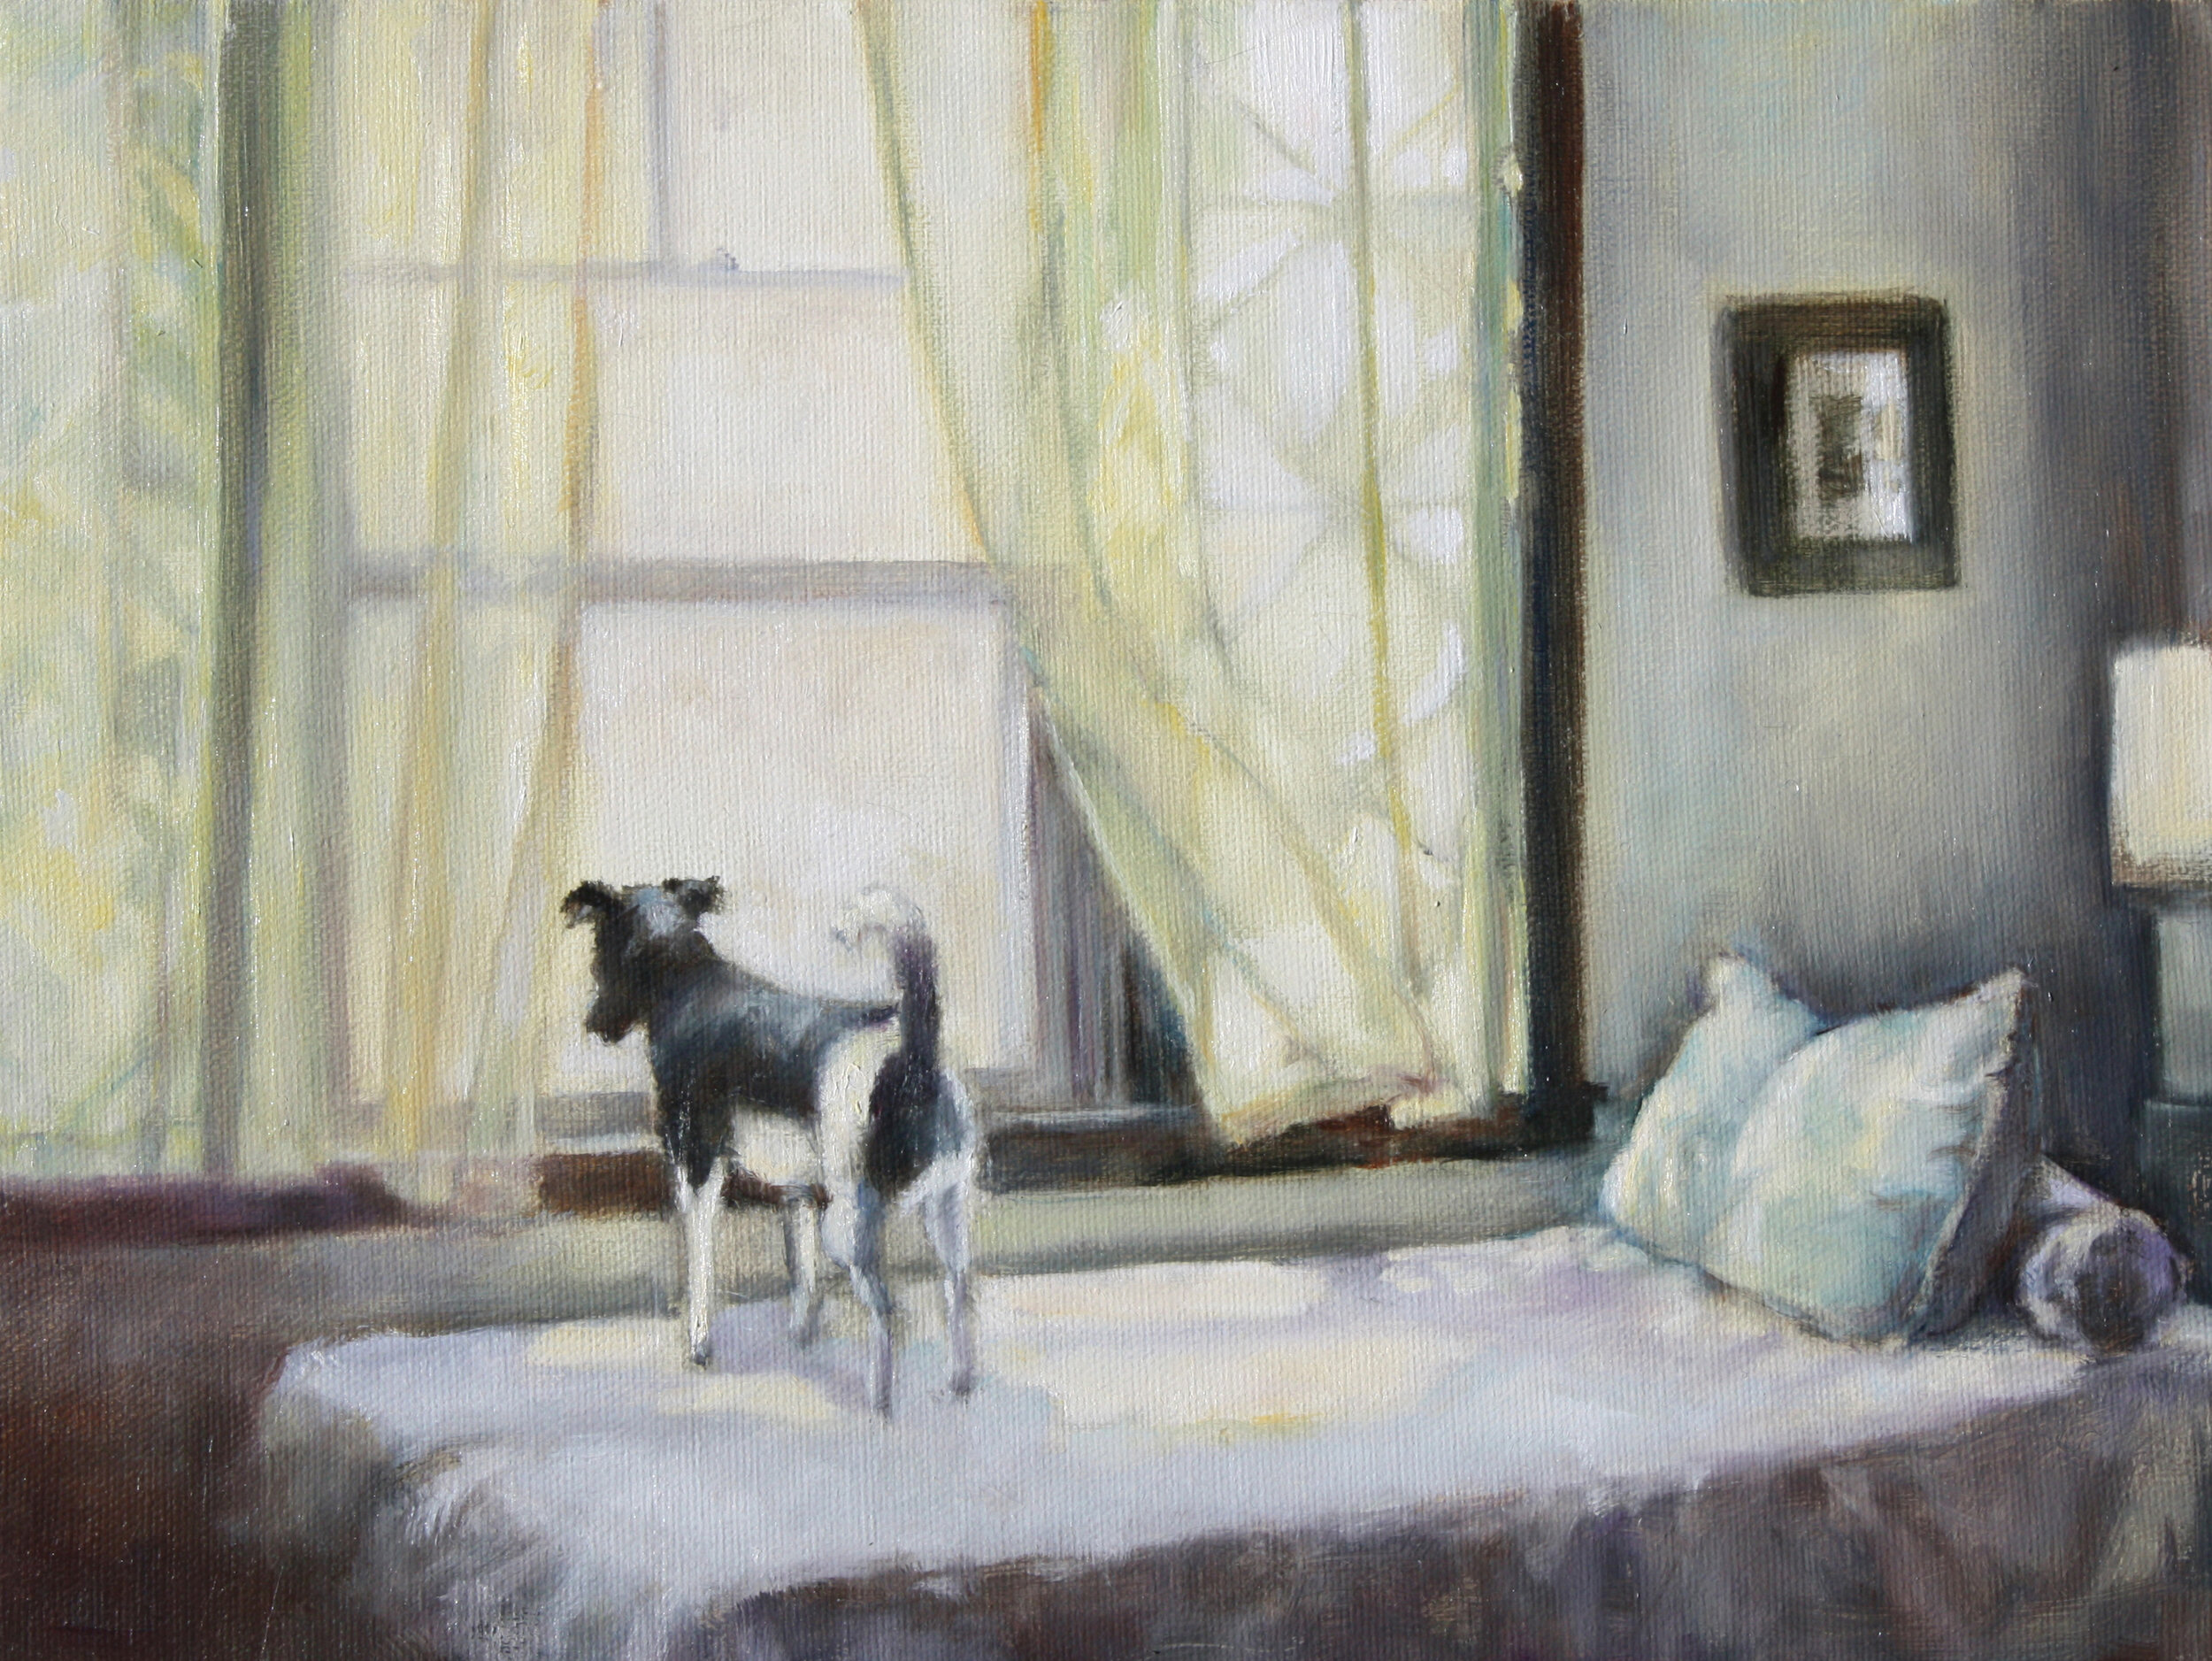  Mary Lou Schempf  Henri,    9” x 12”, oil on canvas  (private collection)  